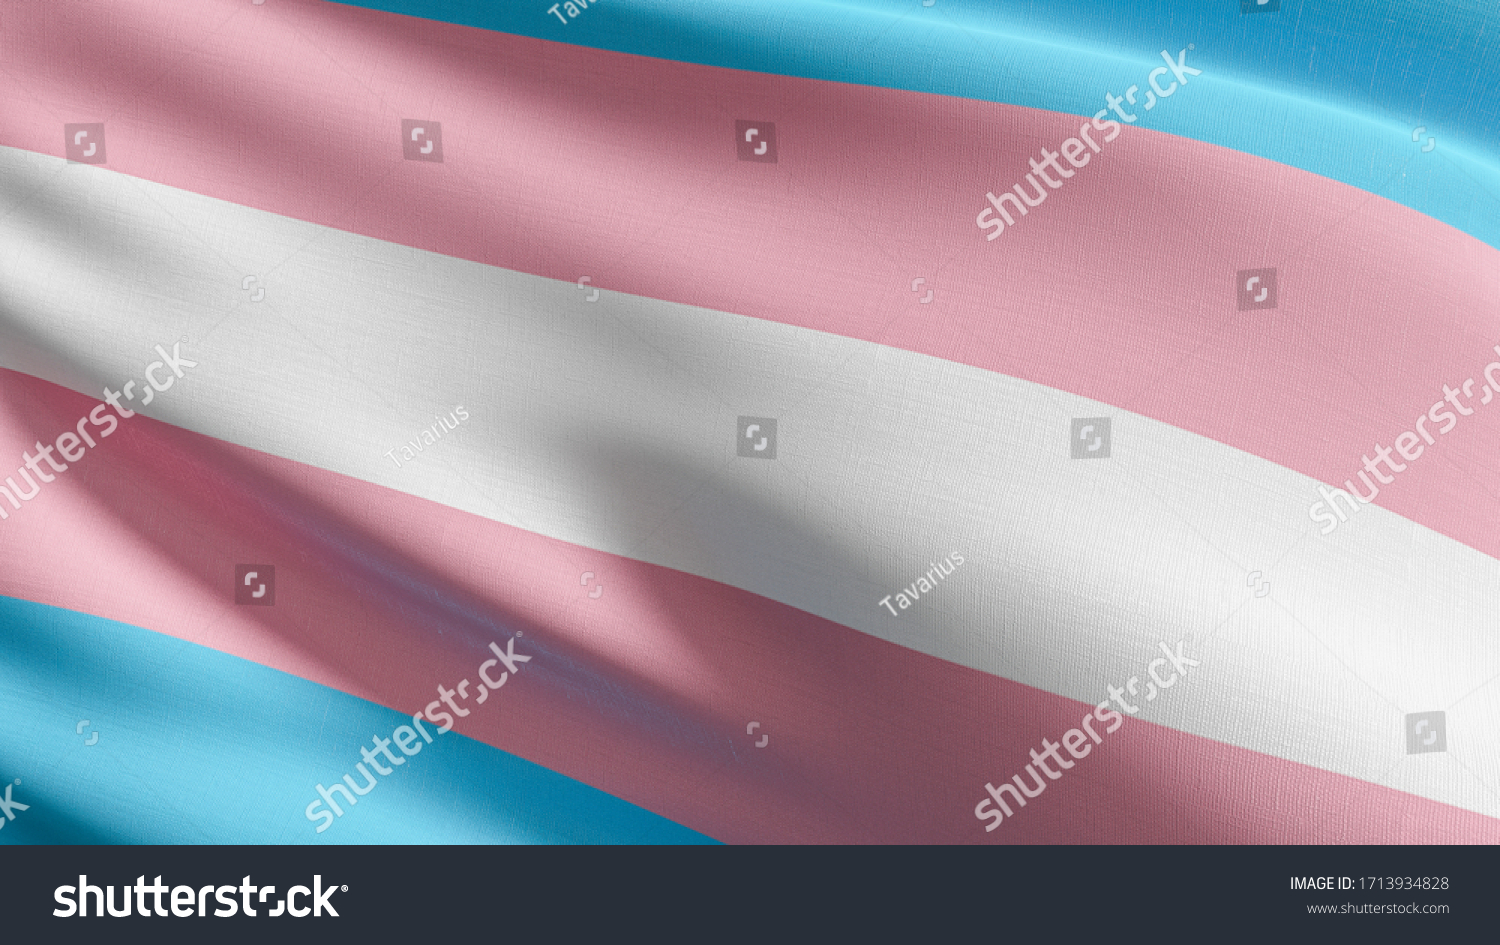 Trans gay pride flag